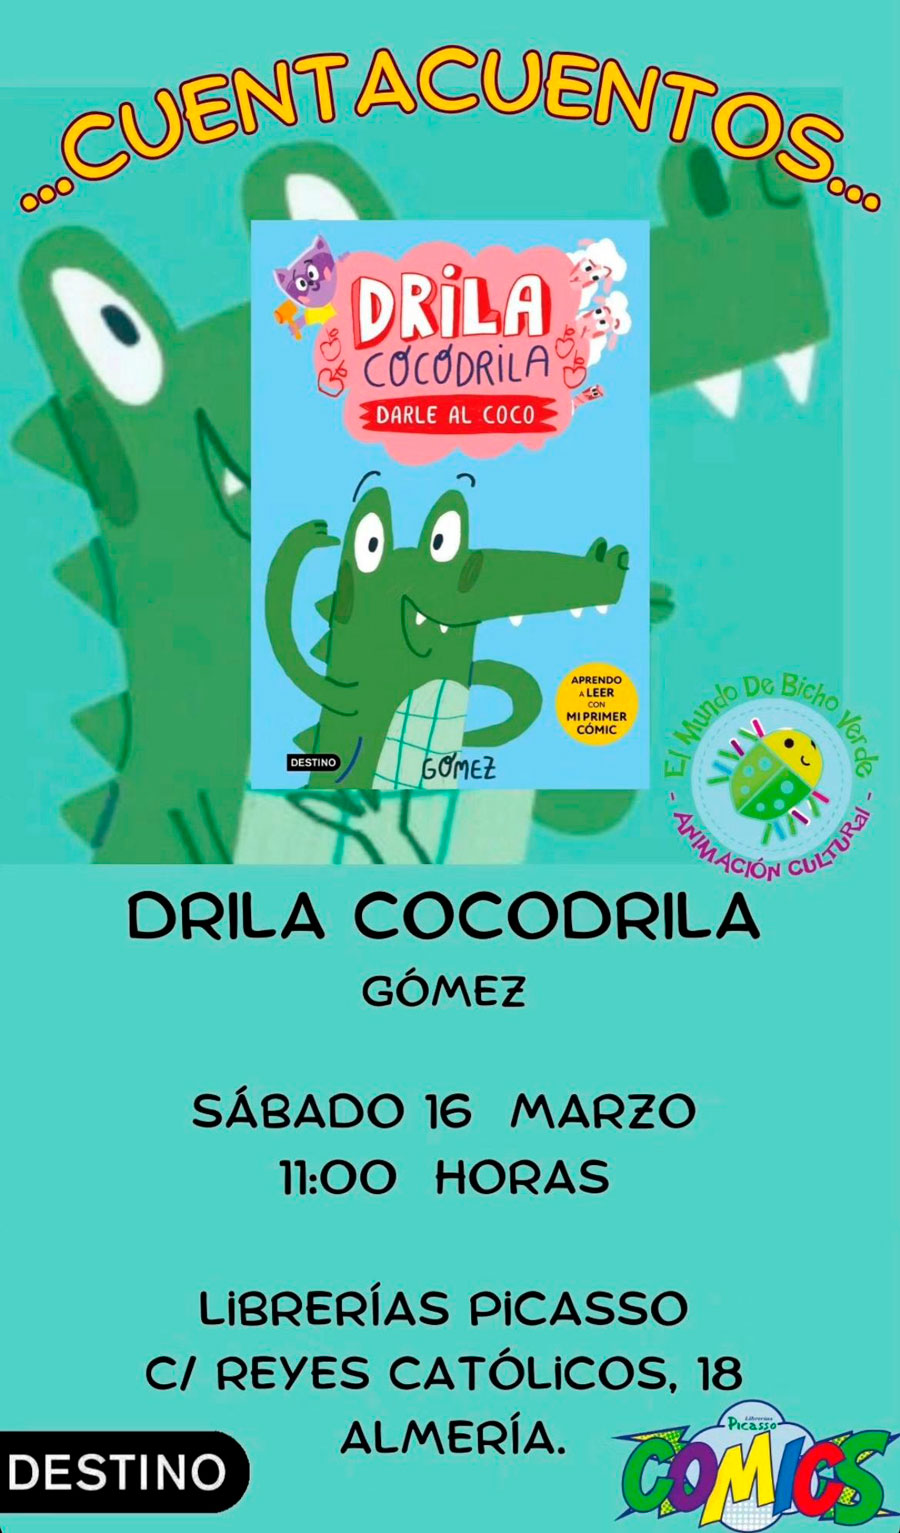 Cuentacuentos - Drila Cocodrila